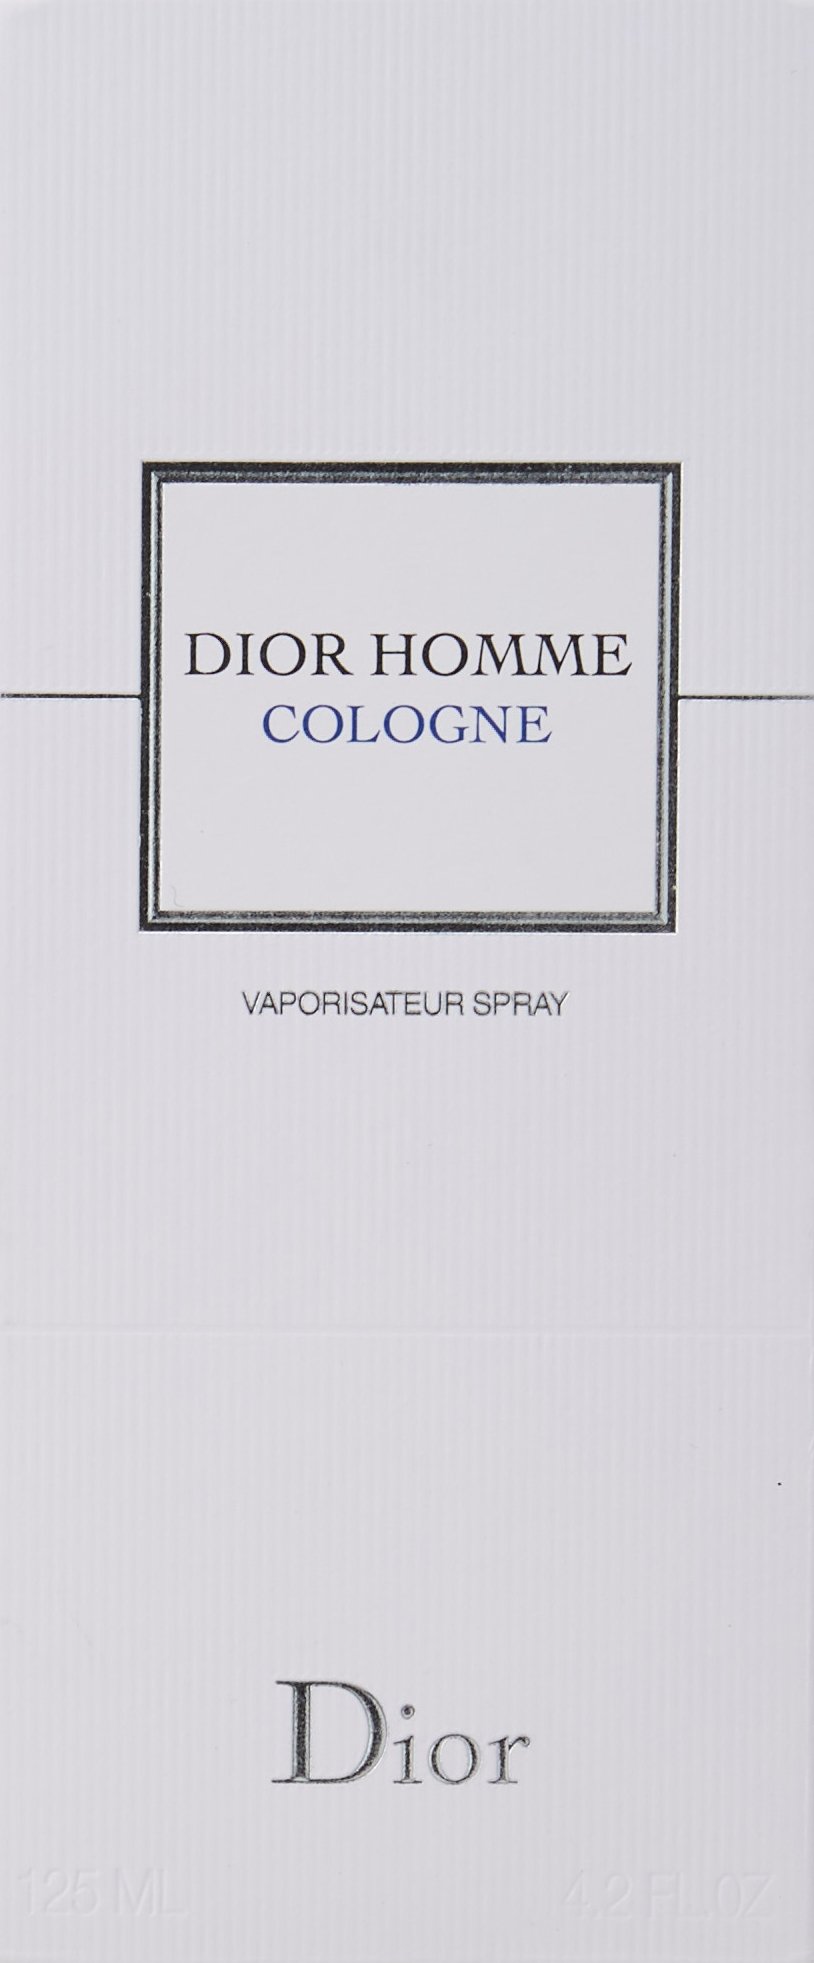 Christian Dior Cologne Spray for Men, Dior Homme, 4.2 Ounce